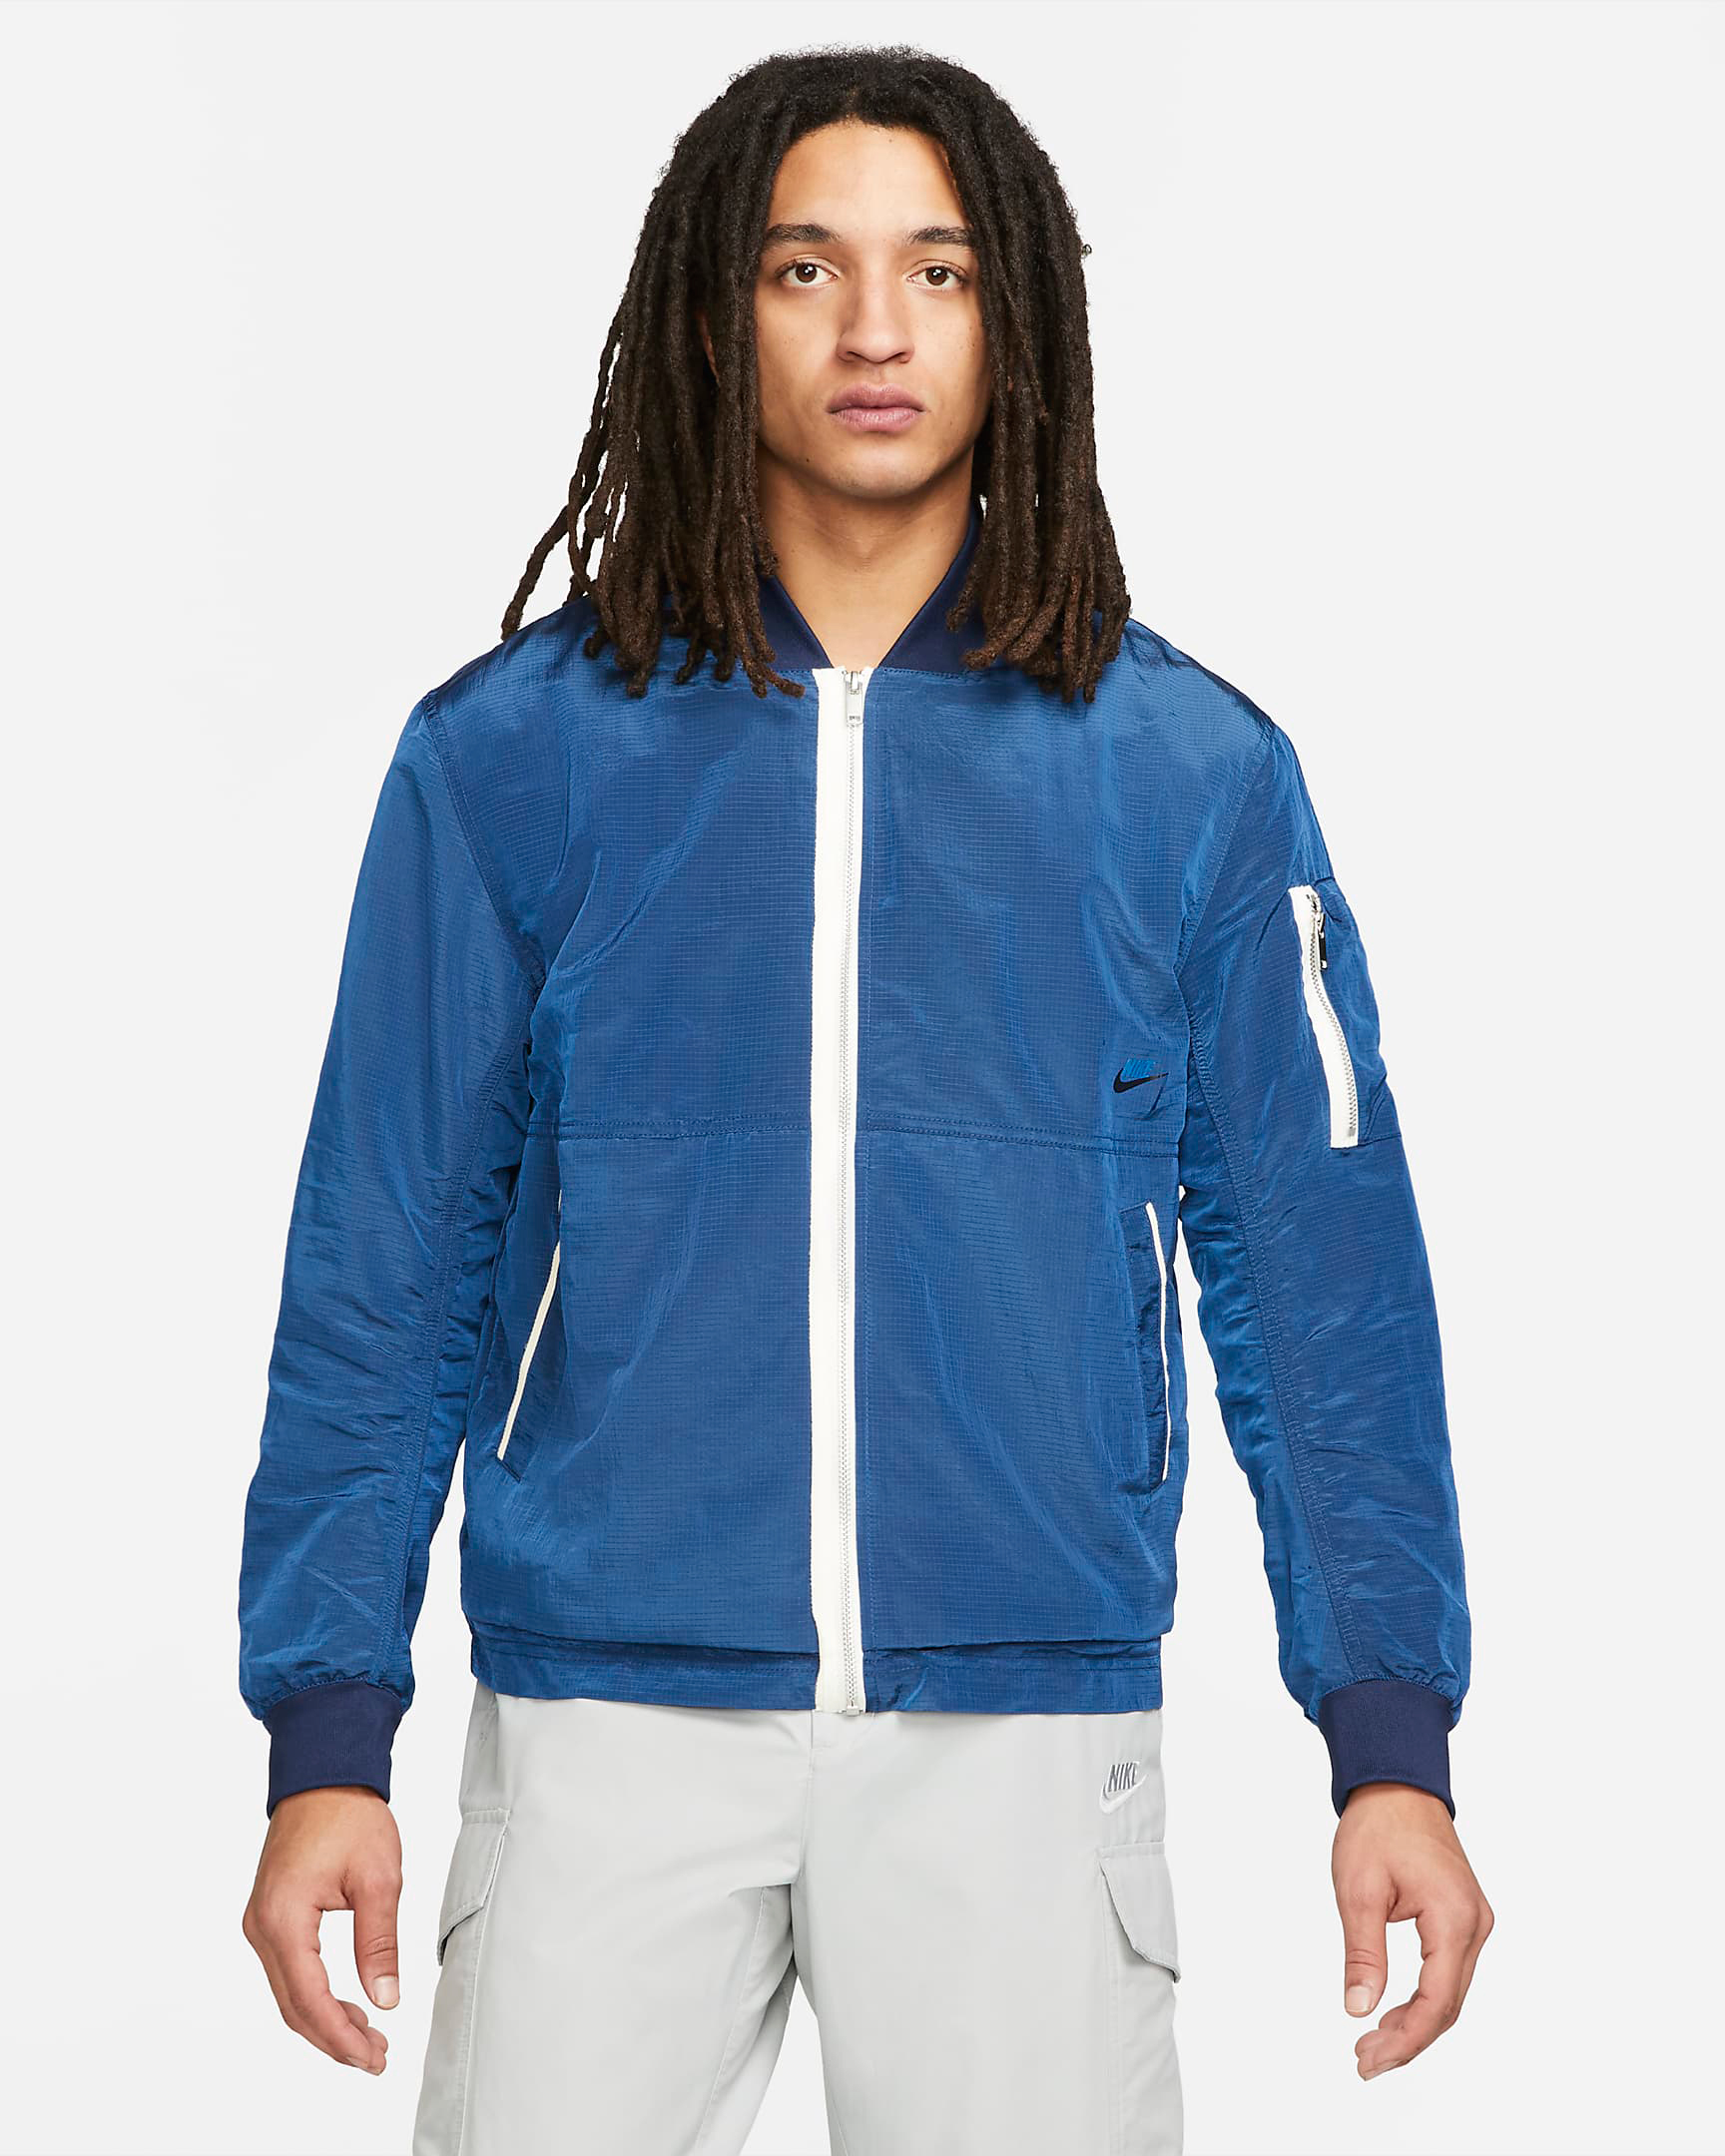 nike-sportswear-bomber-jacket-dark-marina-blue